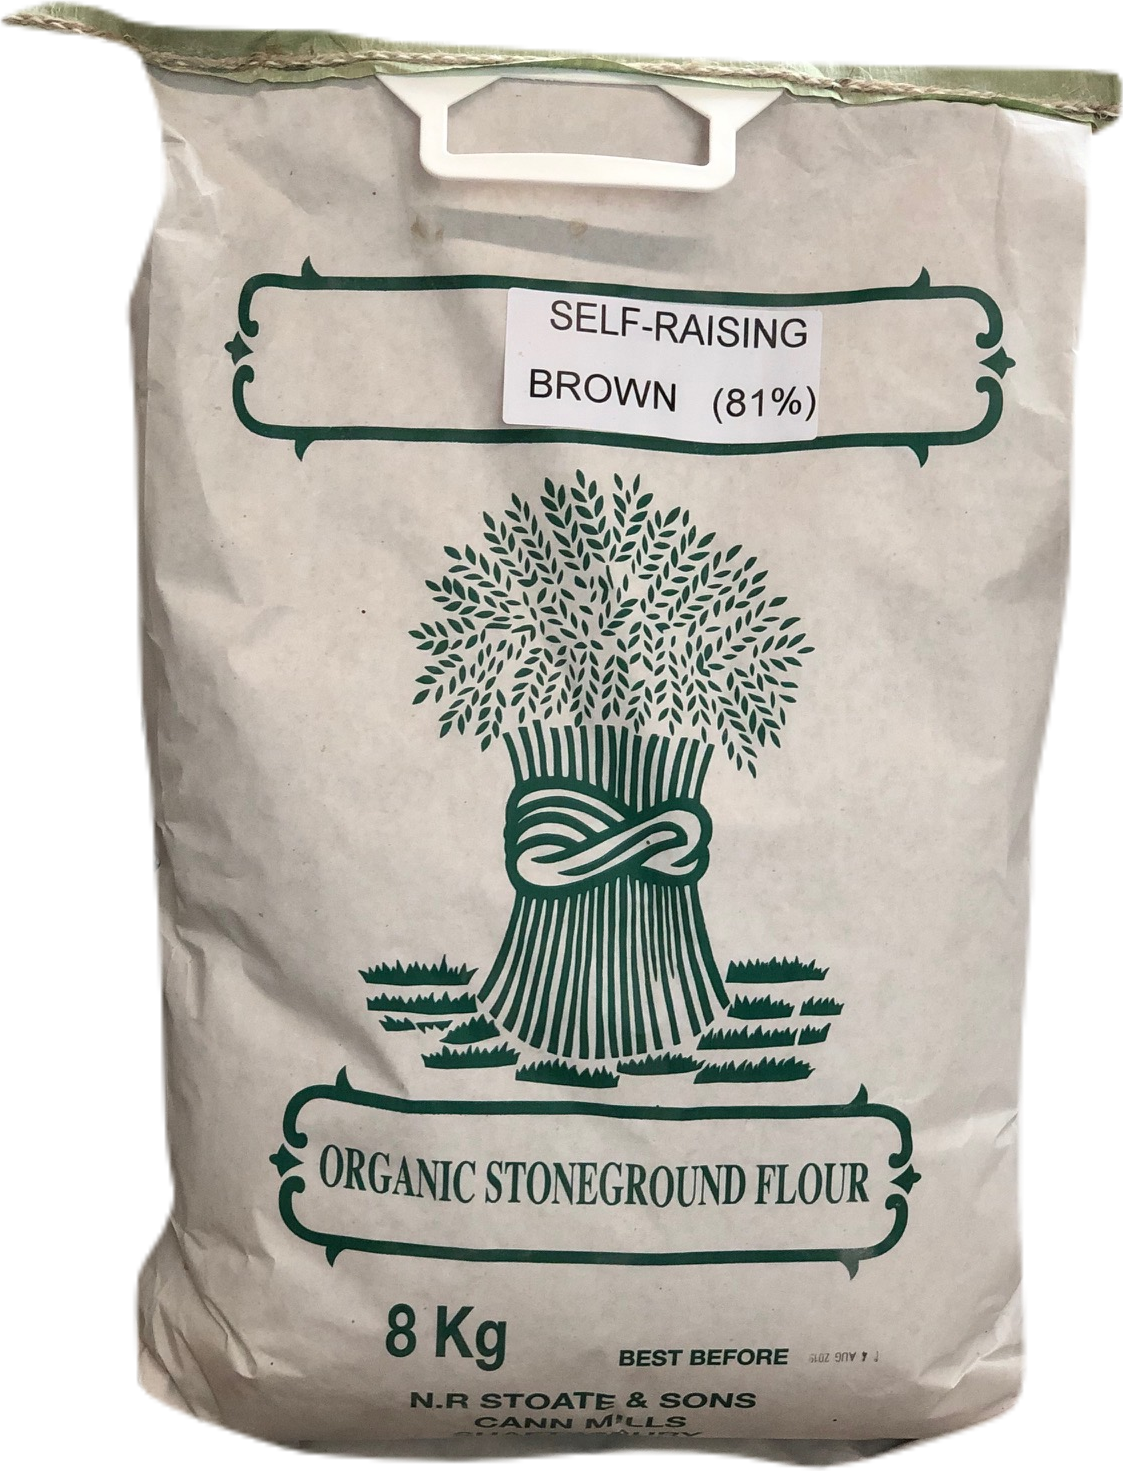 Organic Stoneground 81% Brown Self- Raising Flour 8kgr